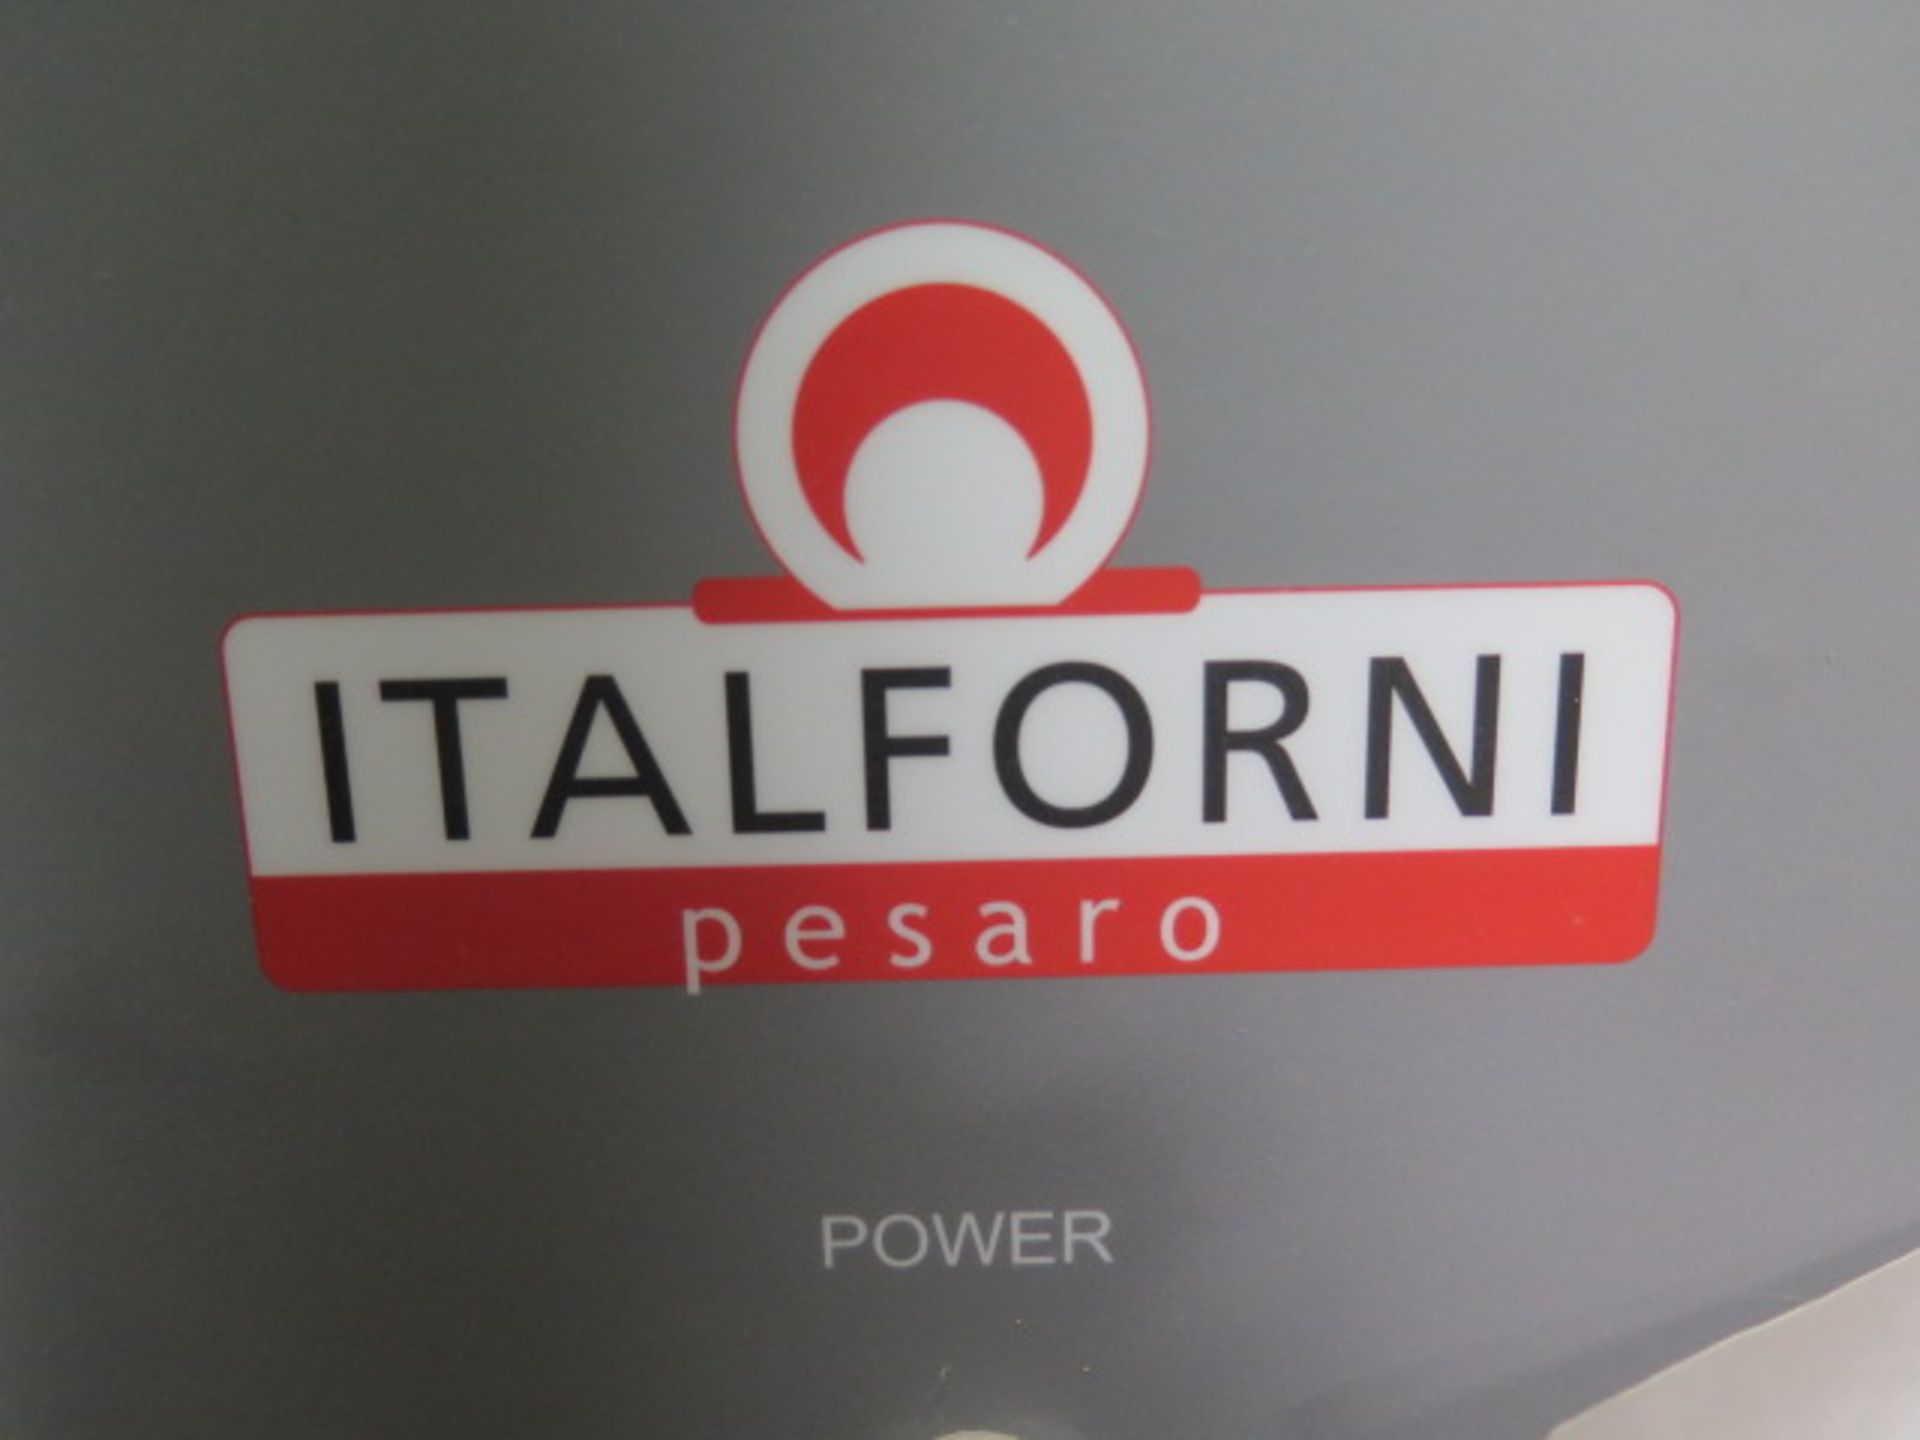 2015 Italforni Pesaro TT600X 600kW Ventilated Elec Kiln s/n 29601 w/ Italforno Control, SOLD AS IS - Image 10 of 12